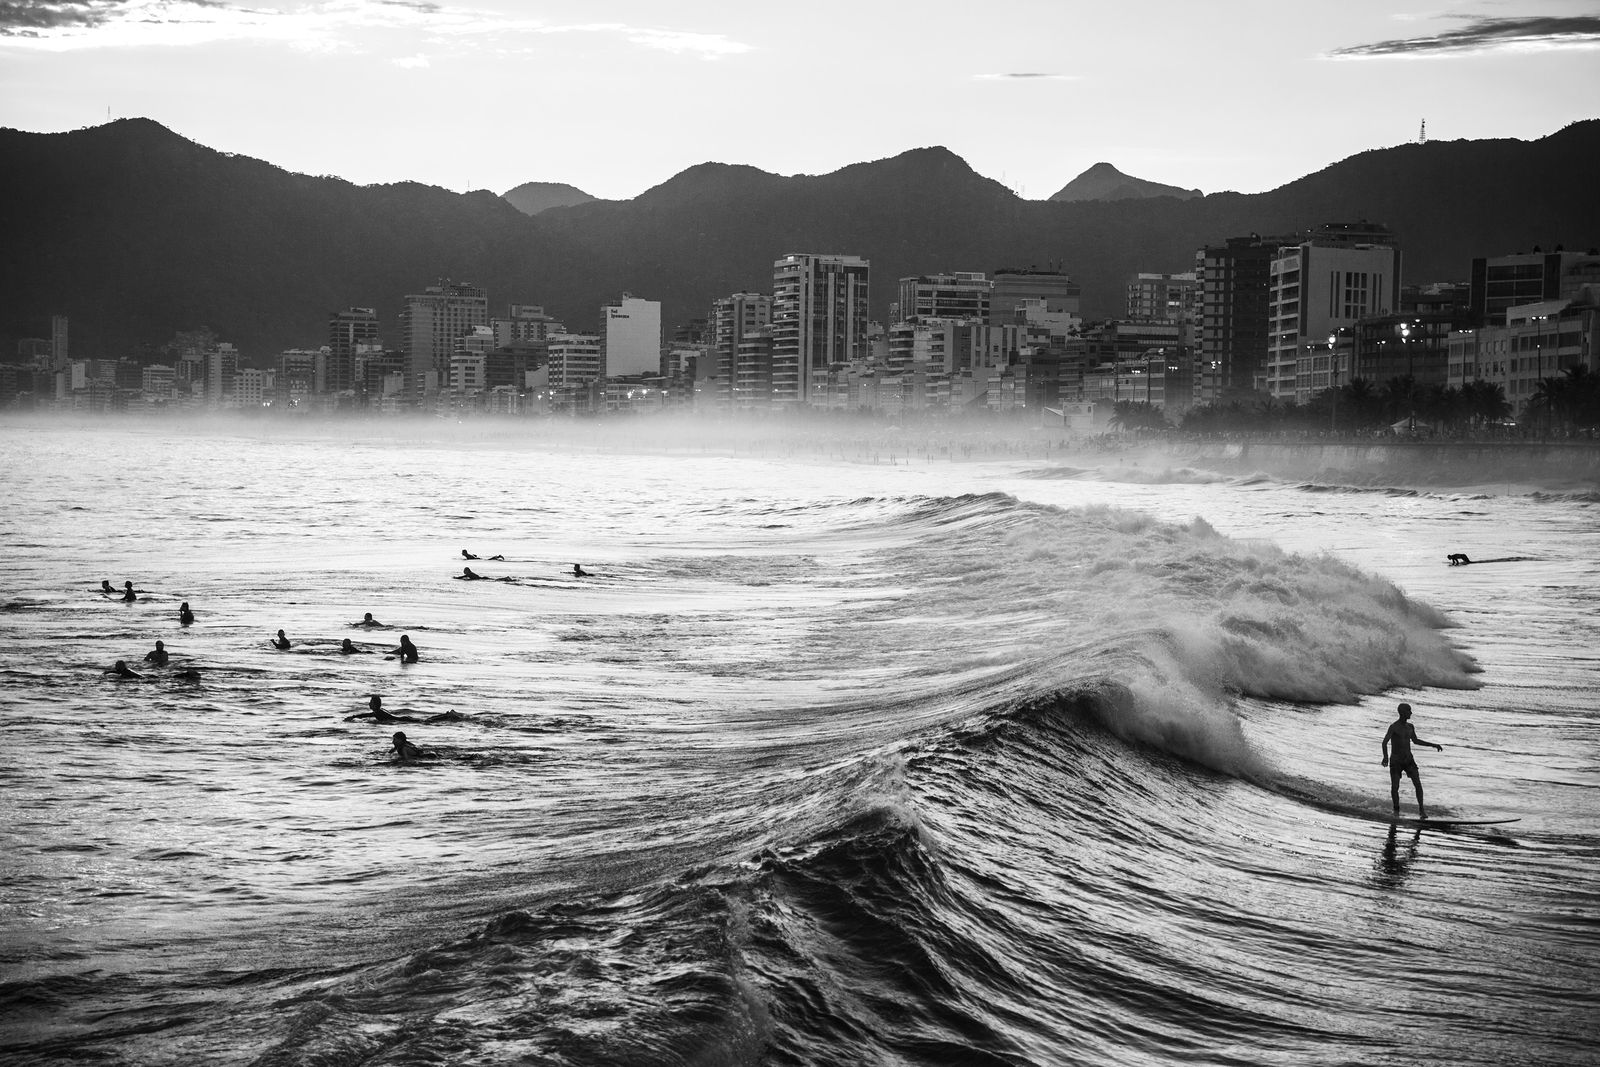 Chronicling Rio de Janeiro’s Great Social Crisis